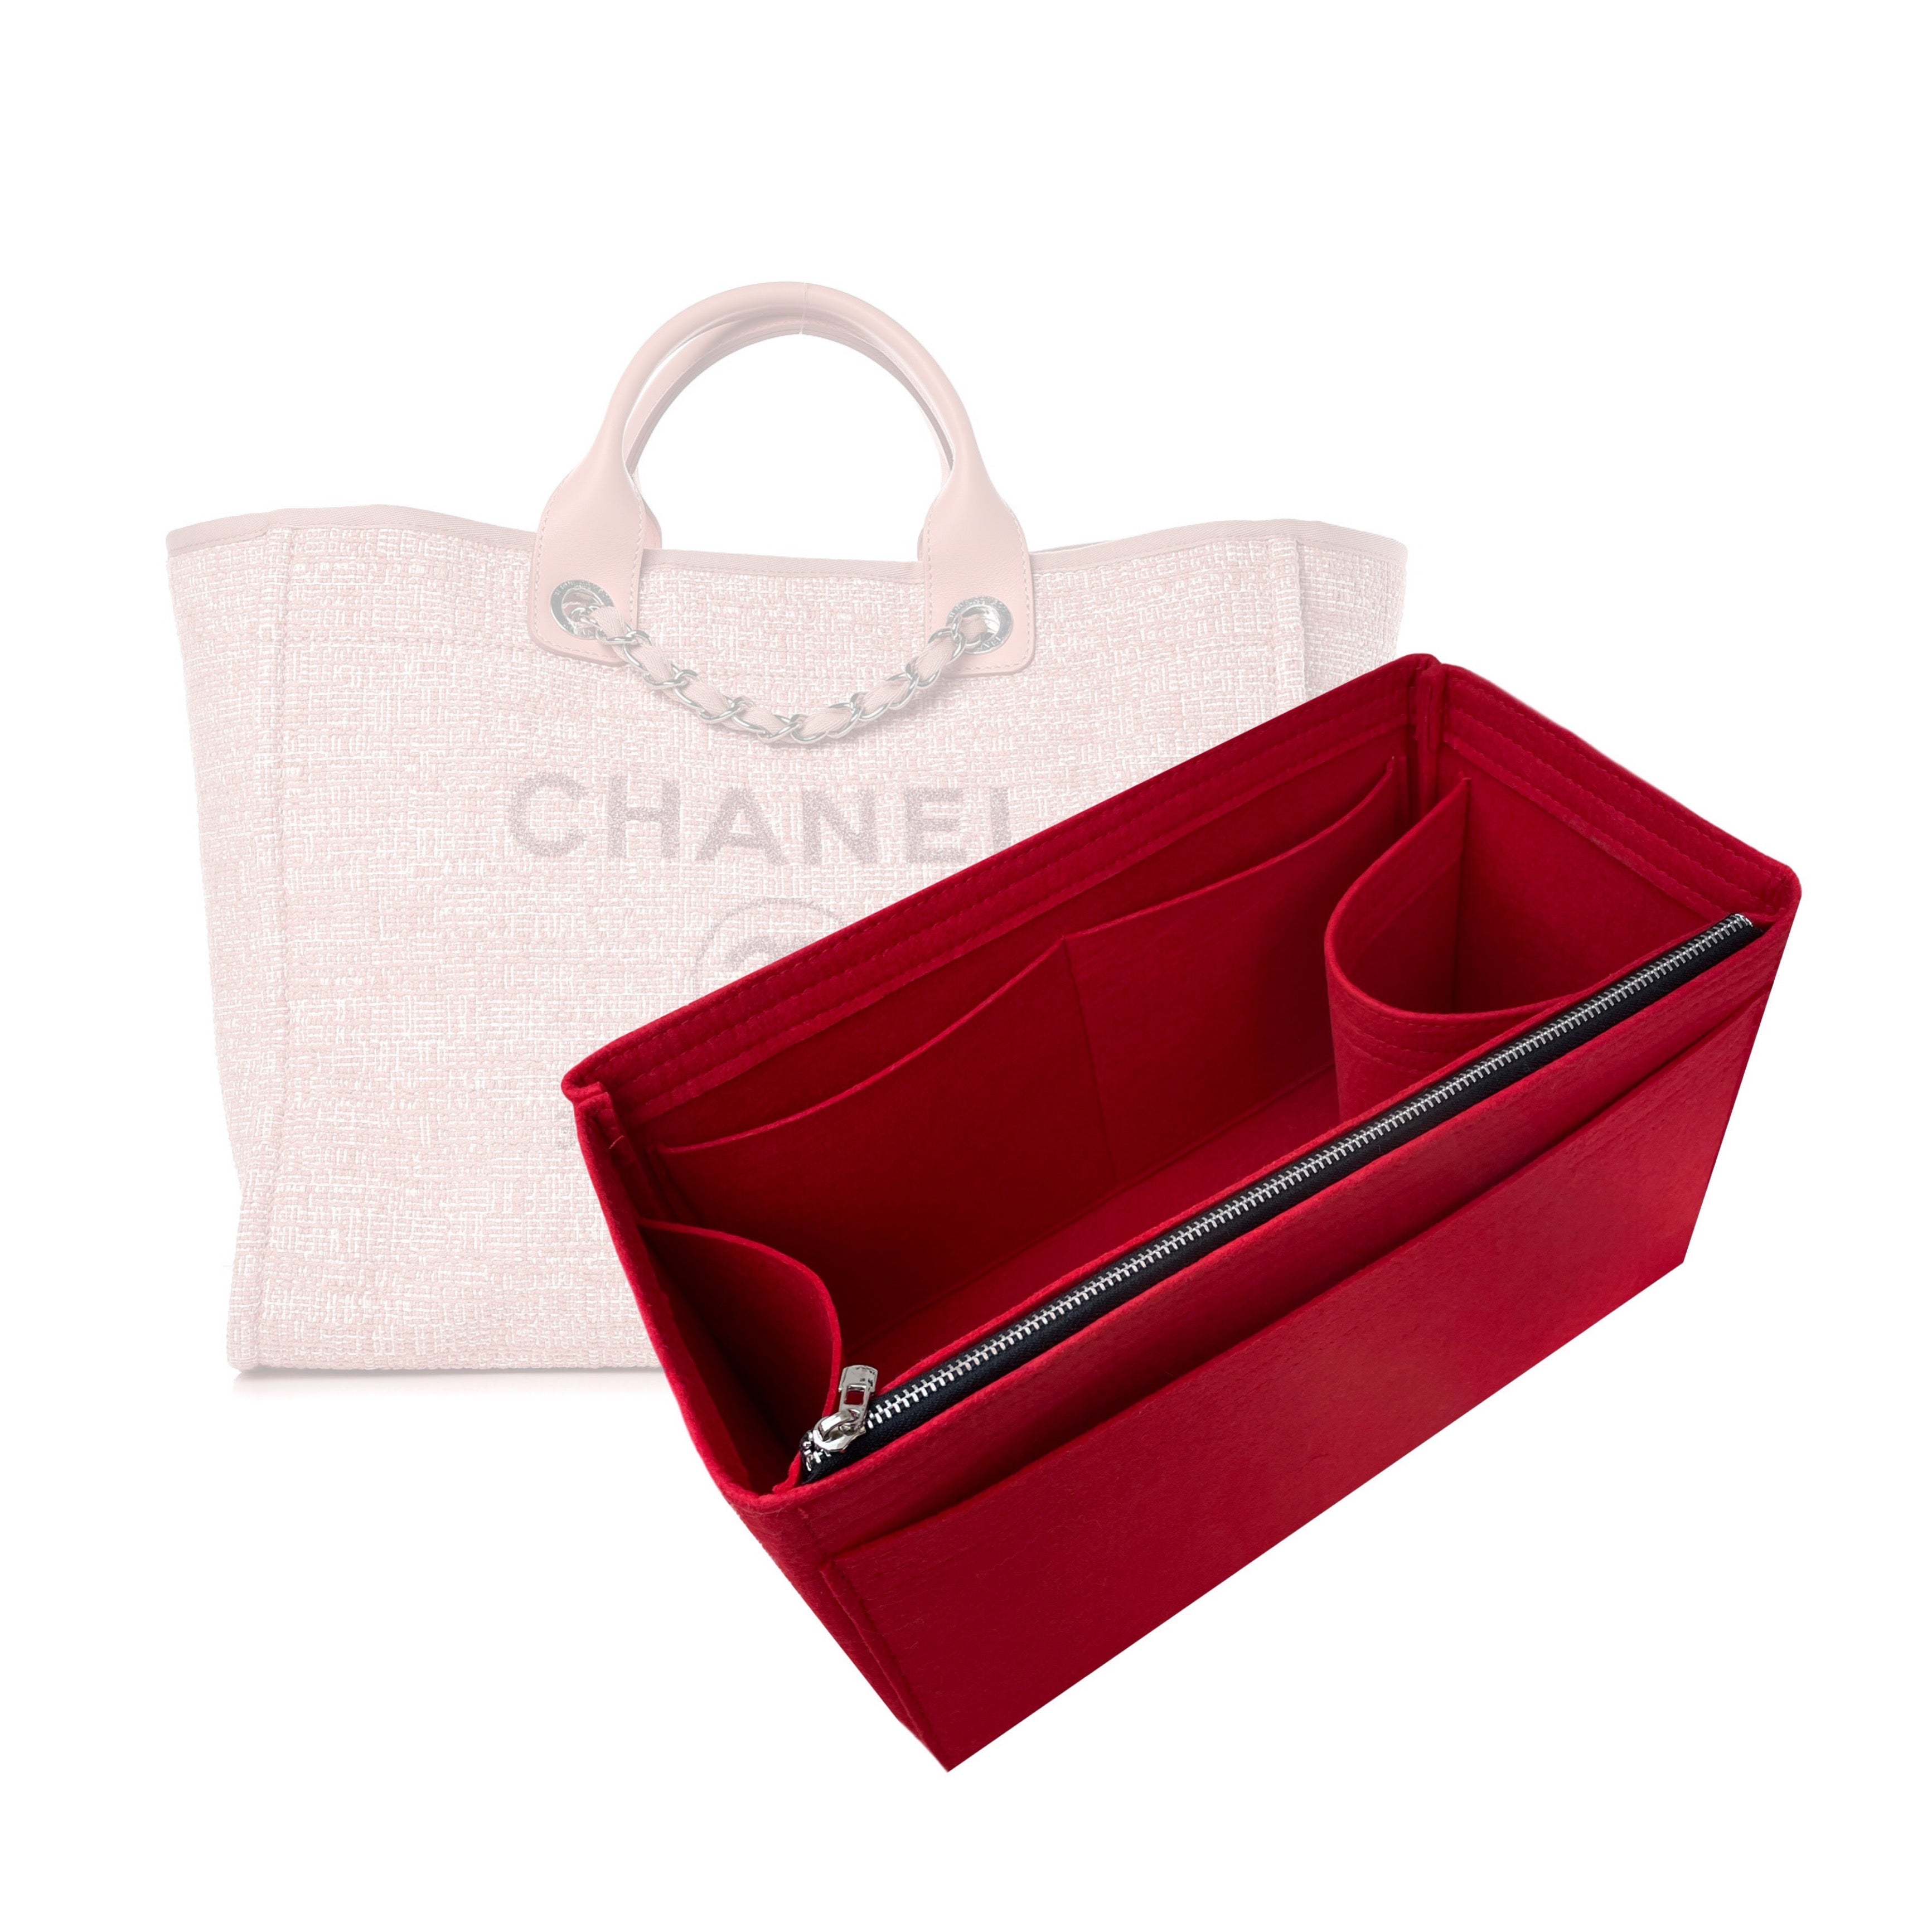 BaginBag | Handbag Organizer For Chanel Deauville Bag | Chanel Purse Insert | Bag Liner | Chanel Insert Organizer | Chanel Organizer | Chanel Inner Bag | Luxury bag | Chanel Bag protector | Chanel bag Insert